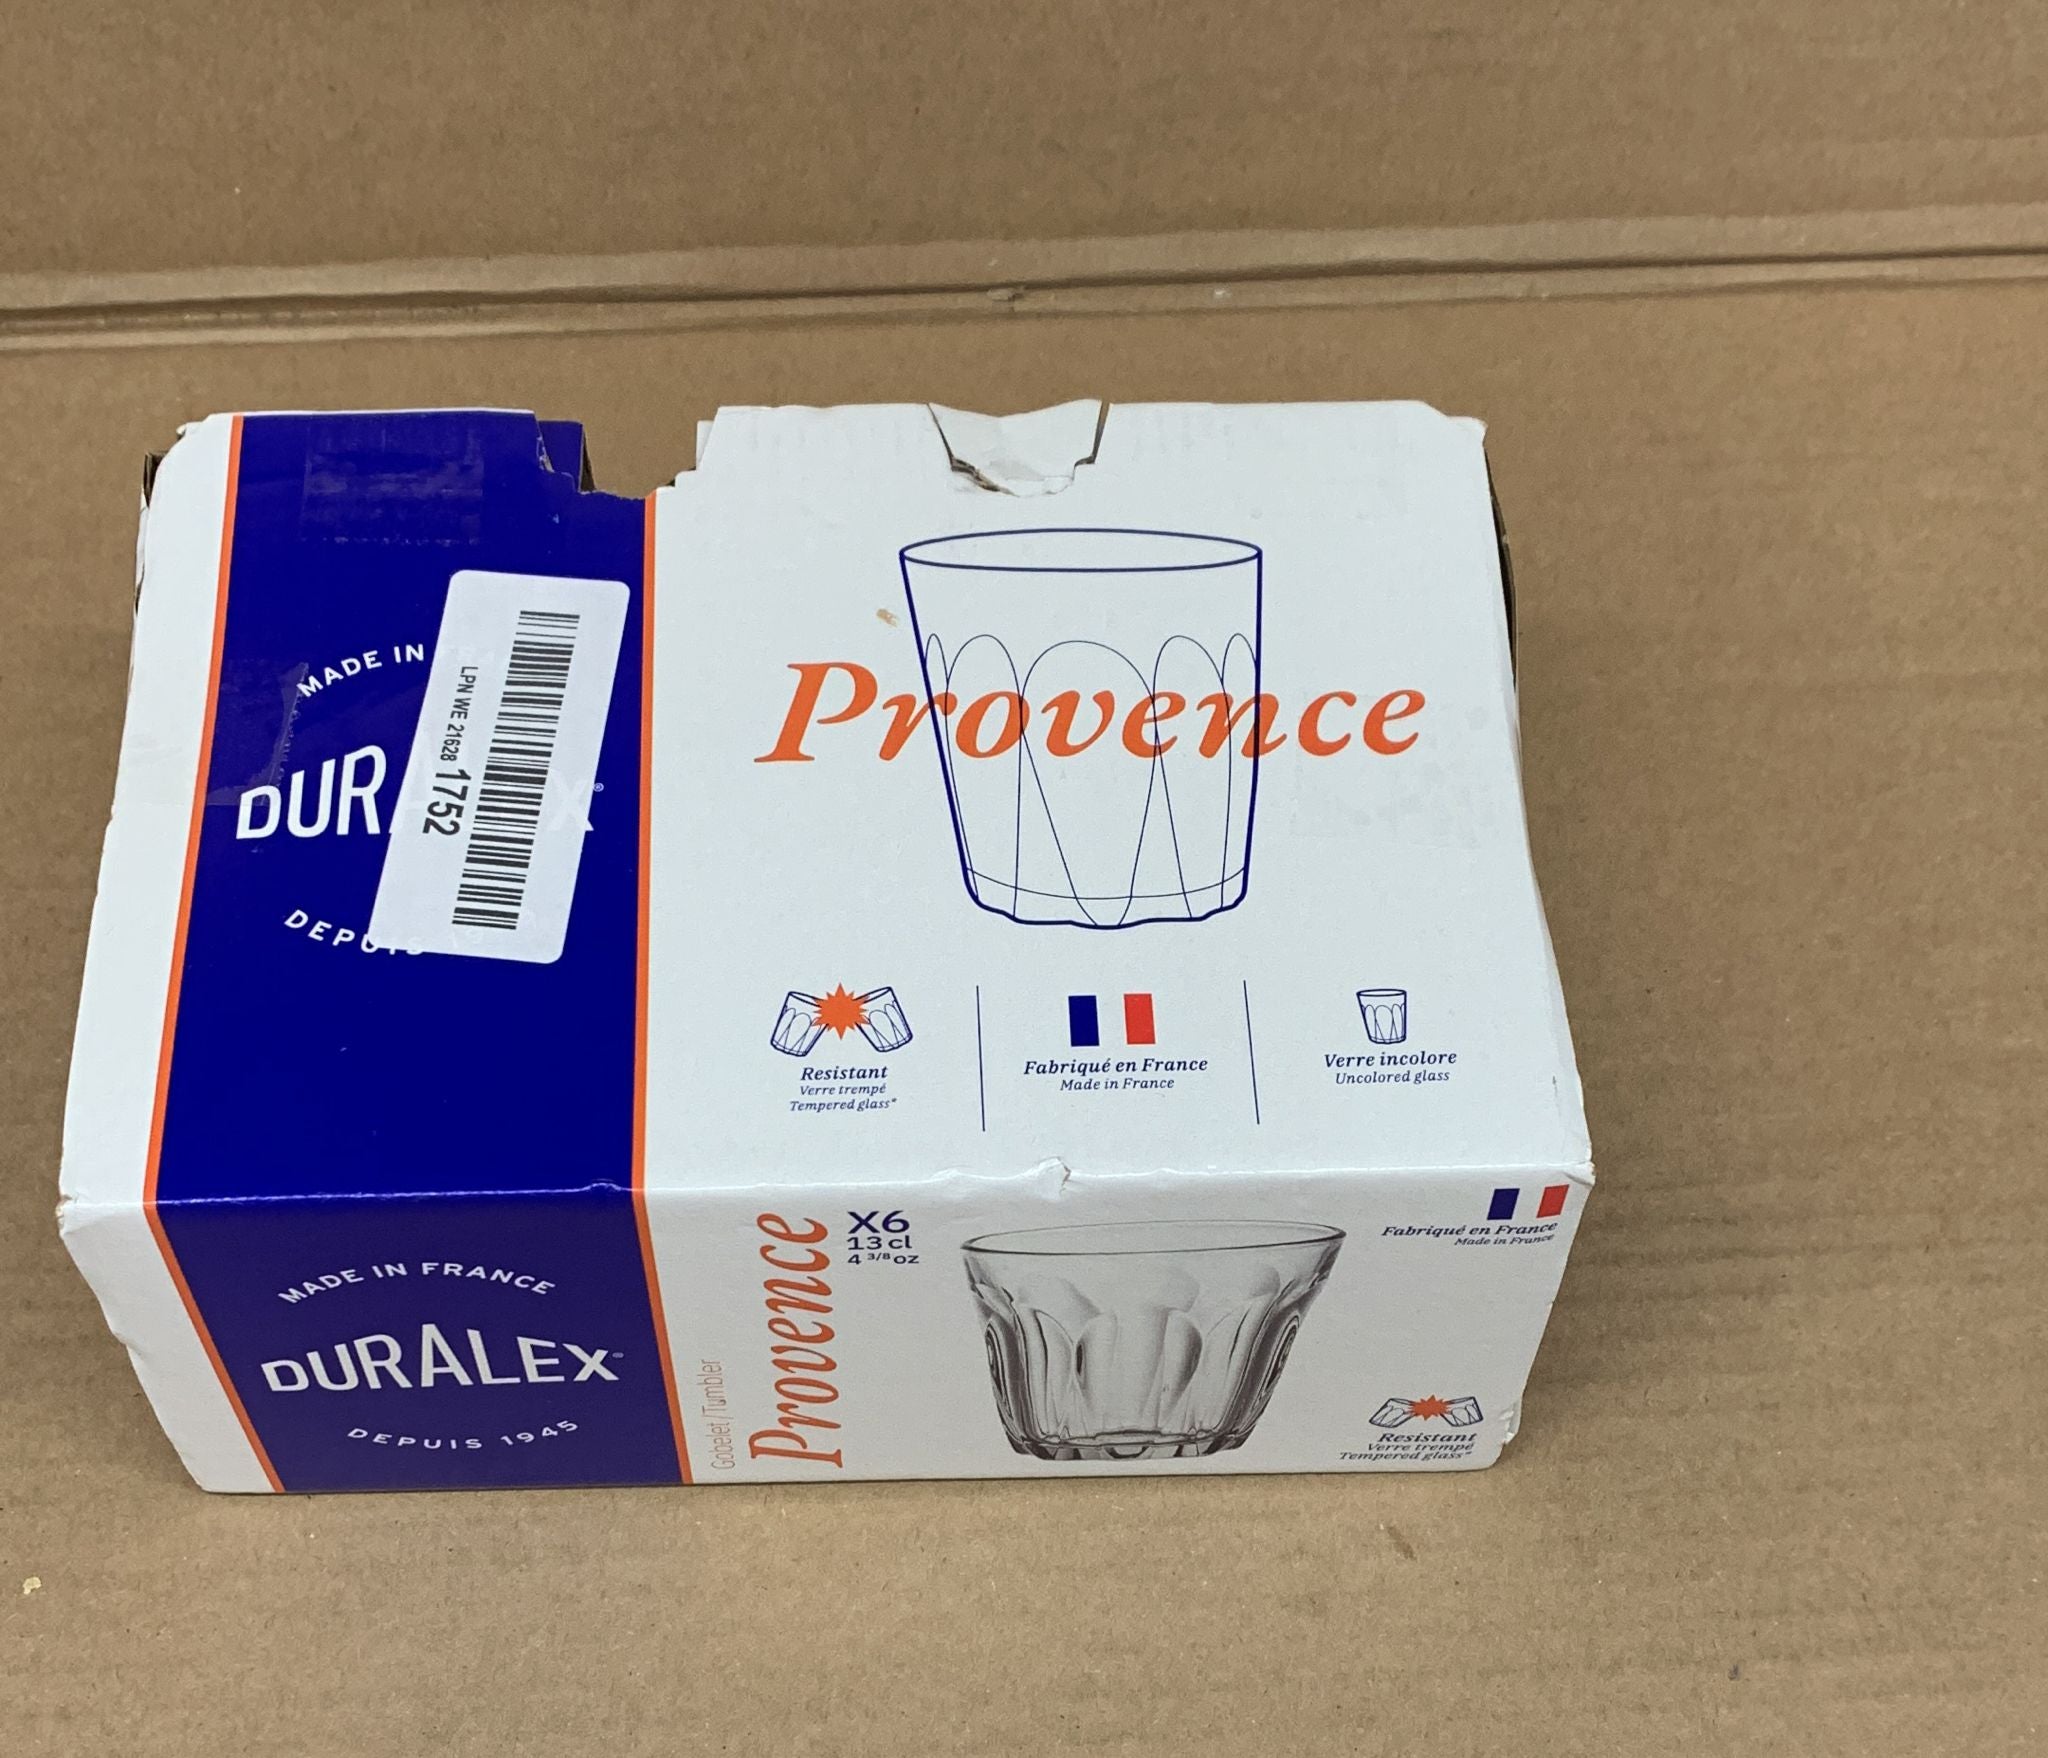 Duralex Provence Tumblers 4.6oz / 130ml (Box of 6)-1186